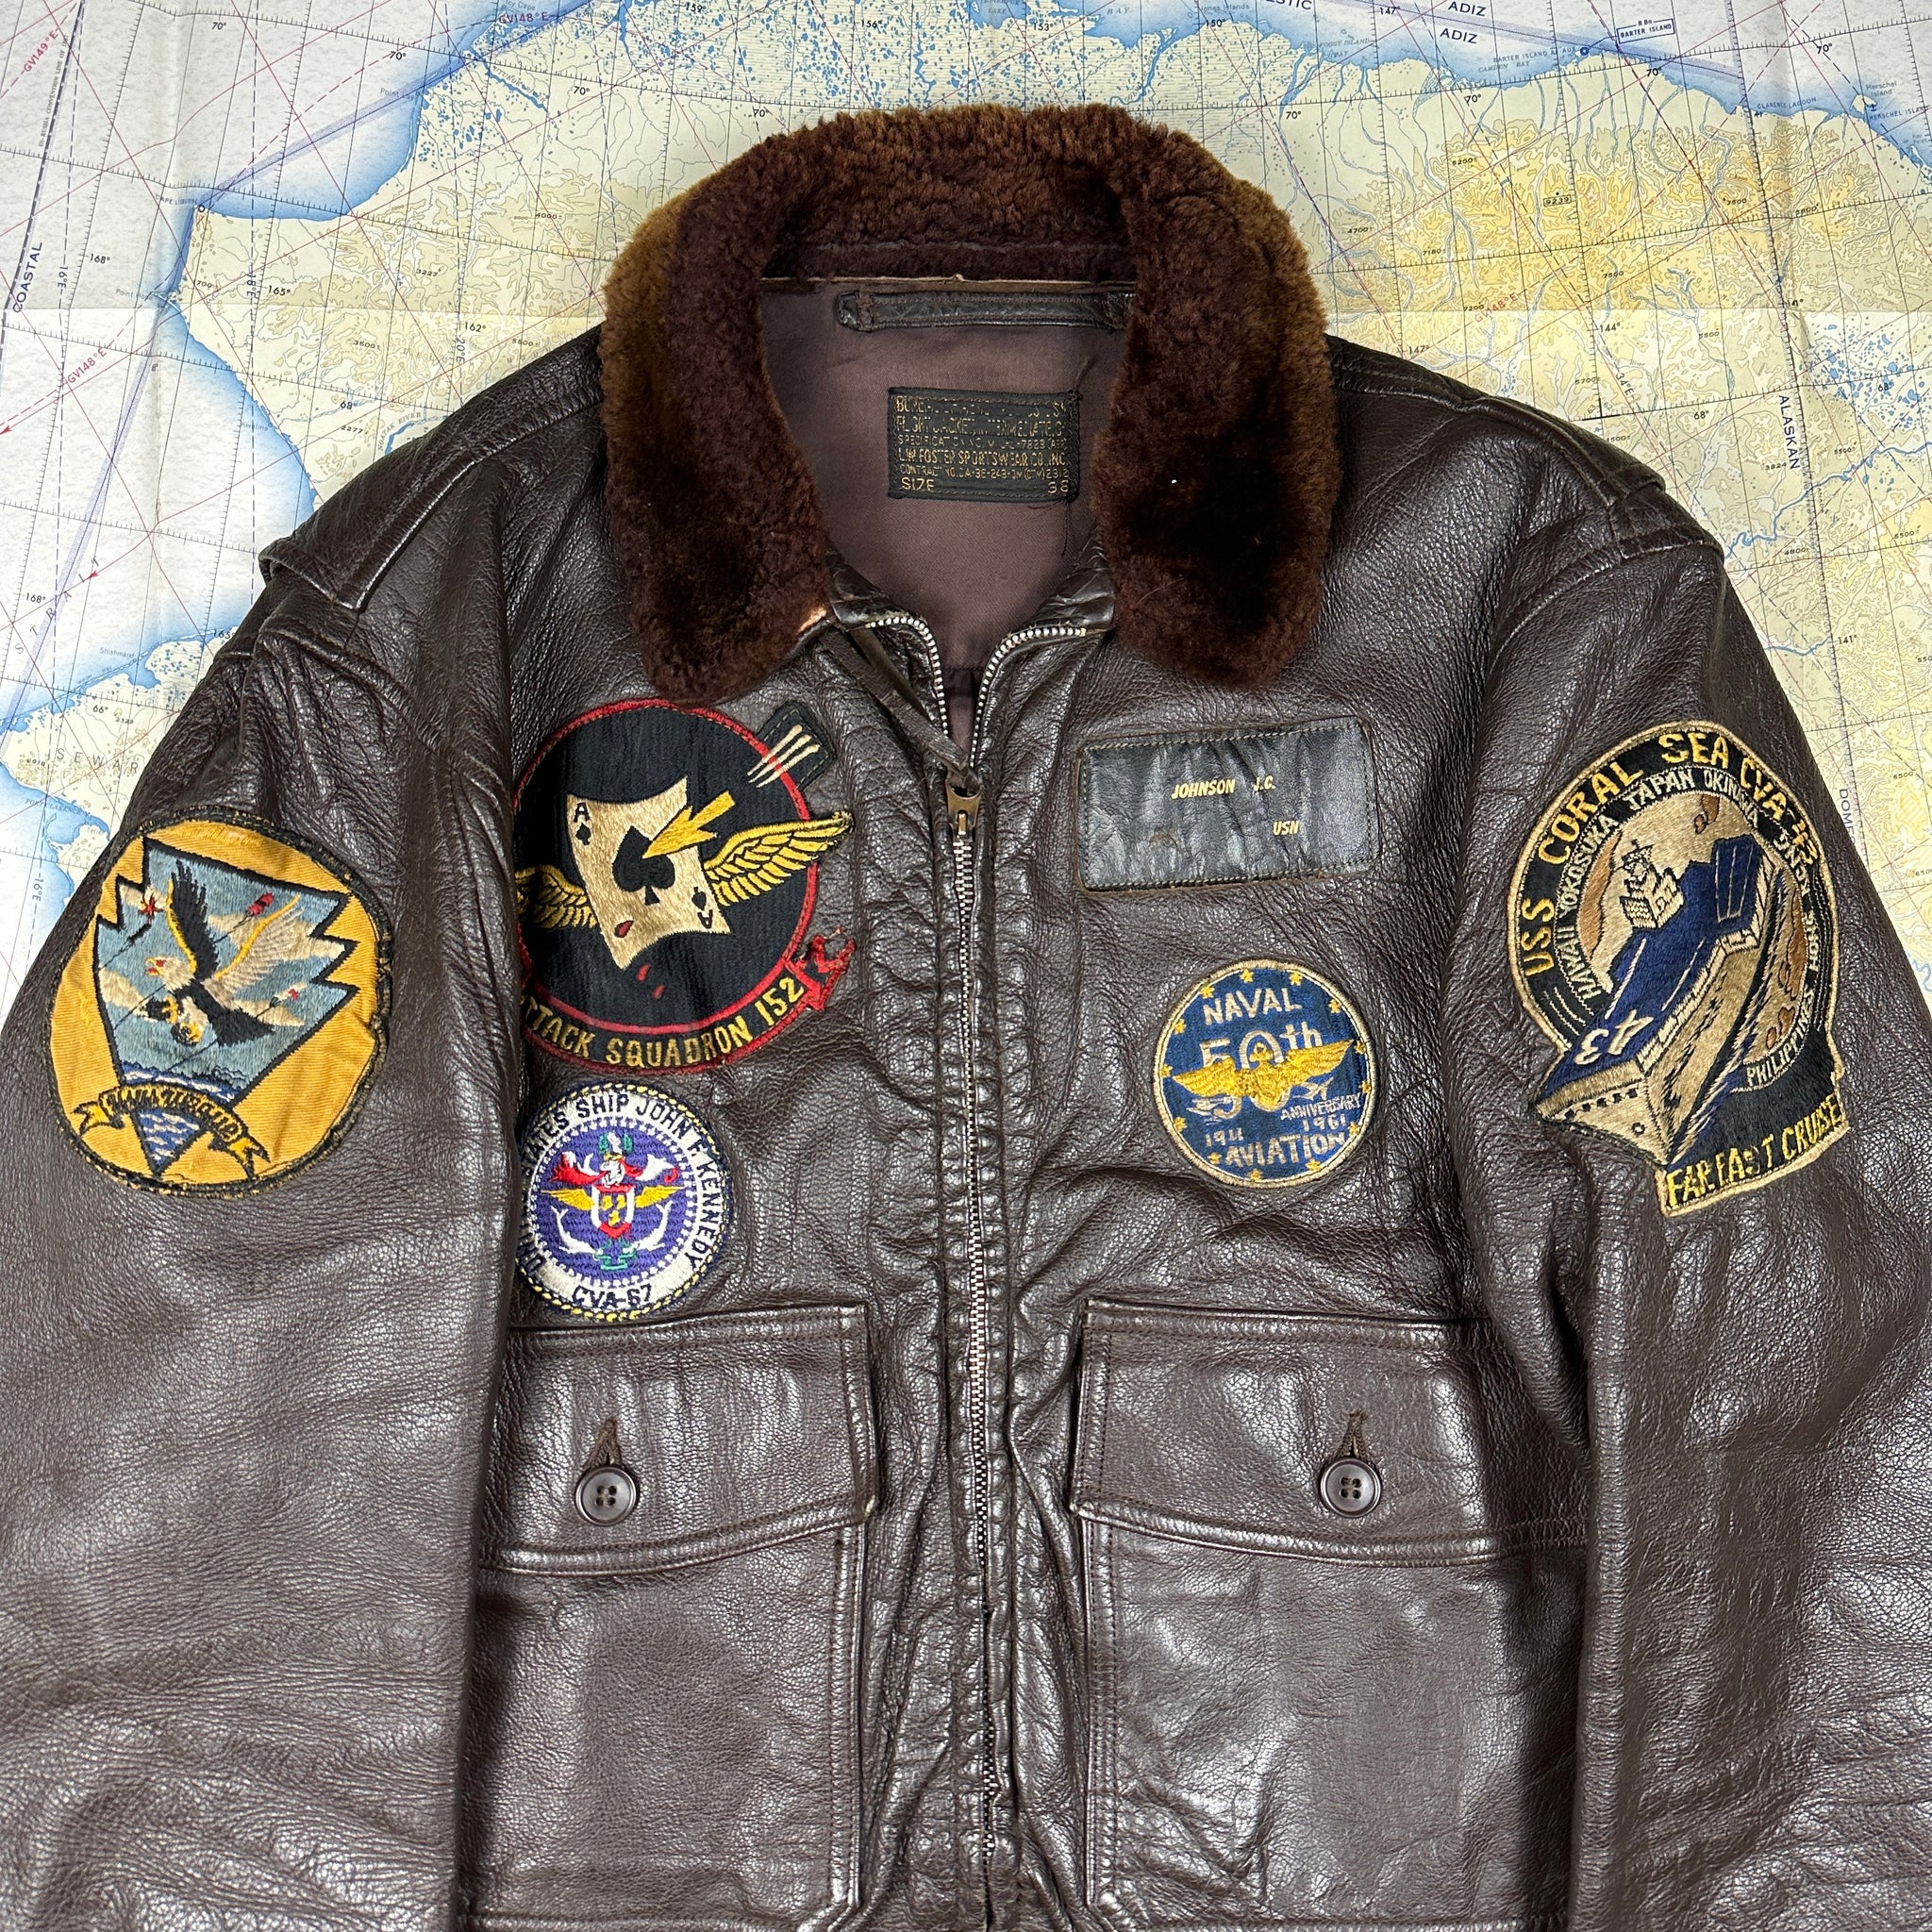 us-navy-g1-flight-jacket-patched-2_1024x1024@2x.jpg